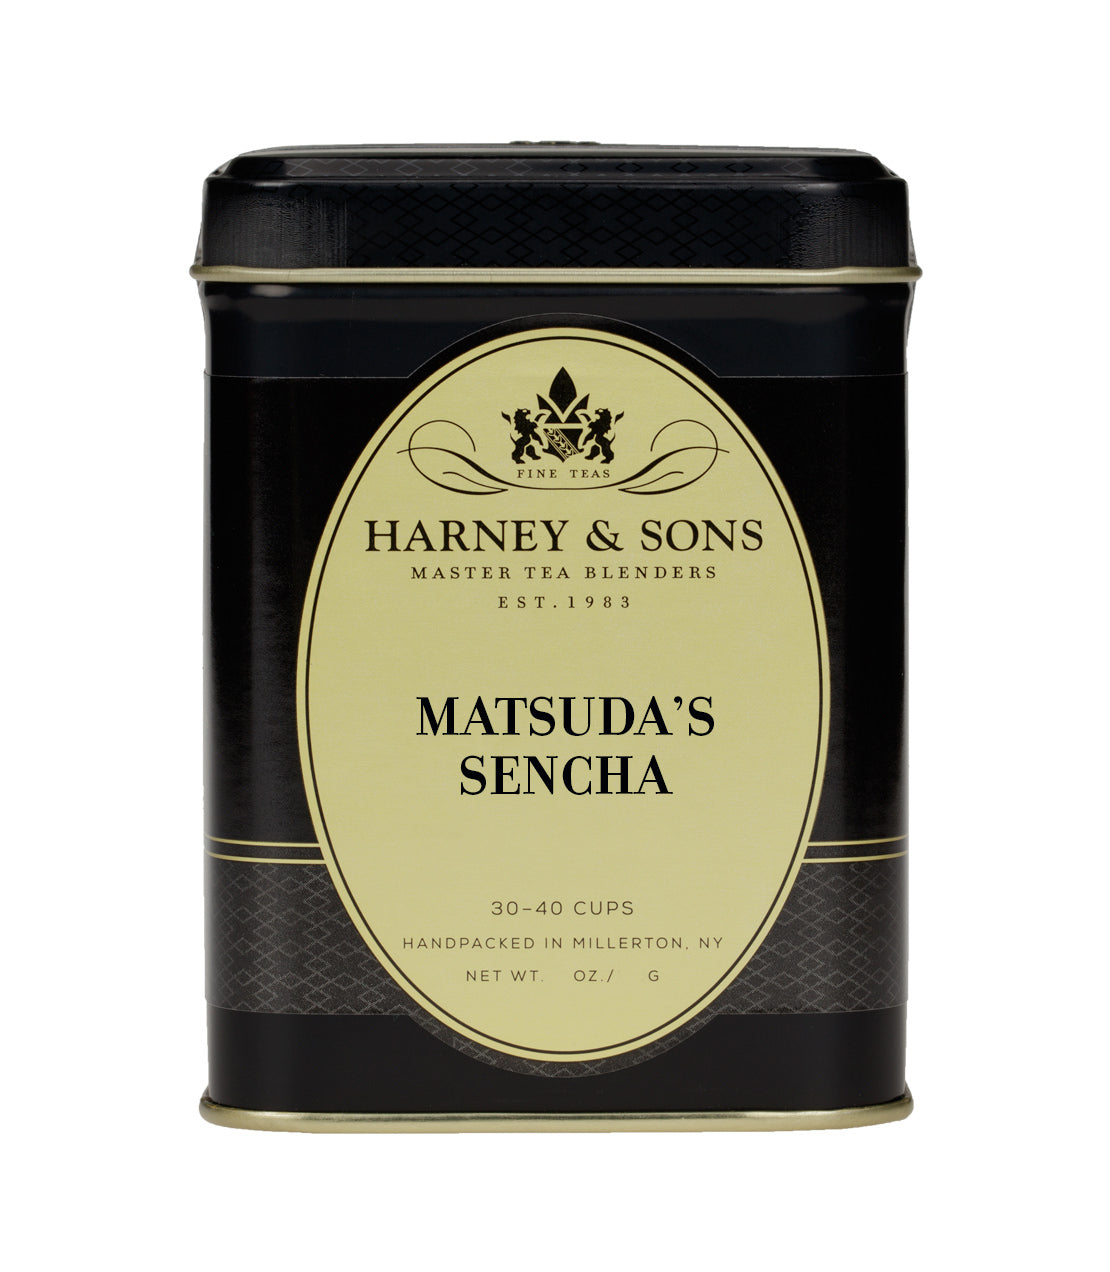 Matsuda’s Sencha - Loose 4 oz. Tin - Harney & Sons Fine Teas